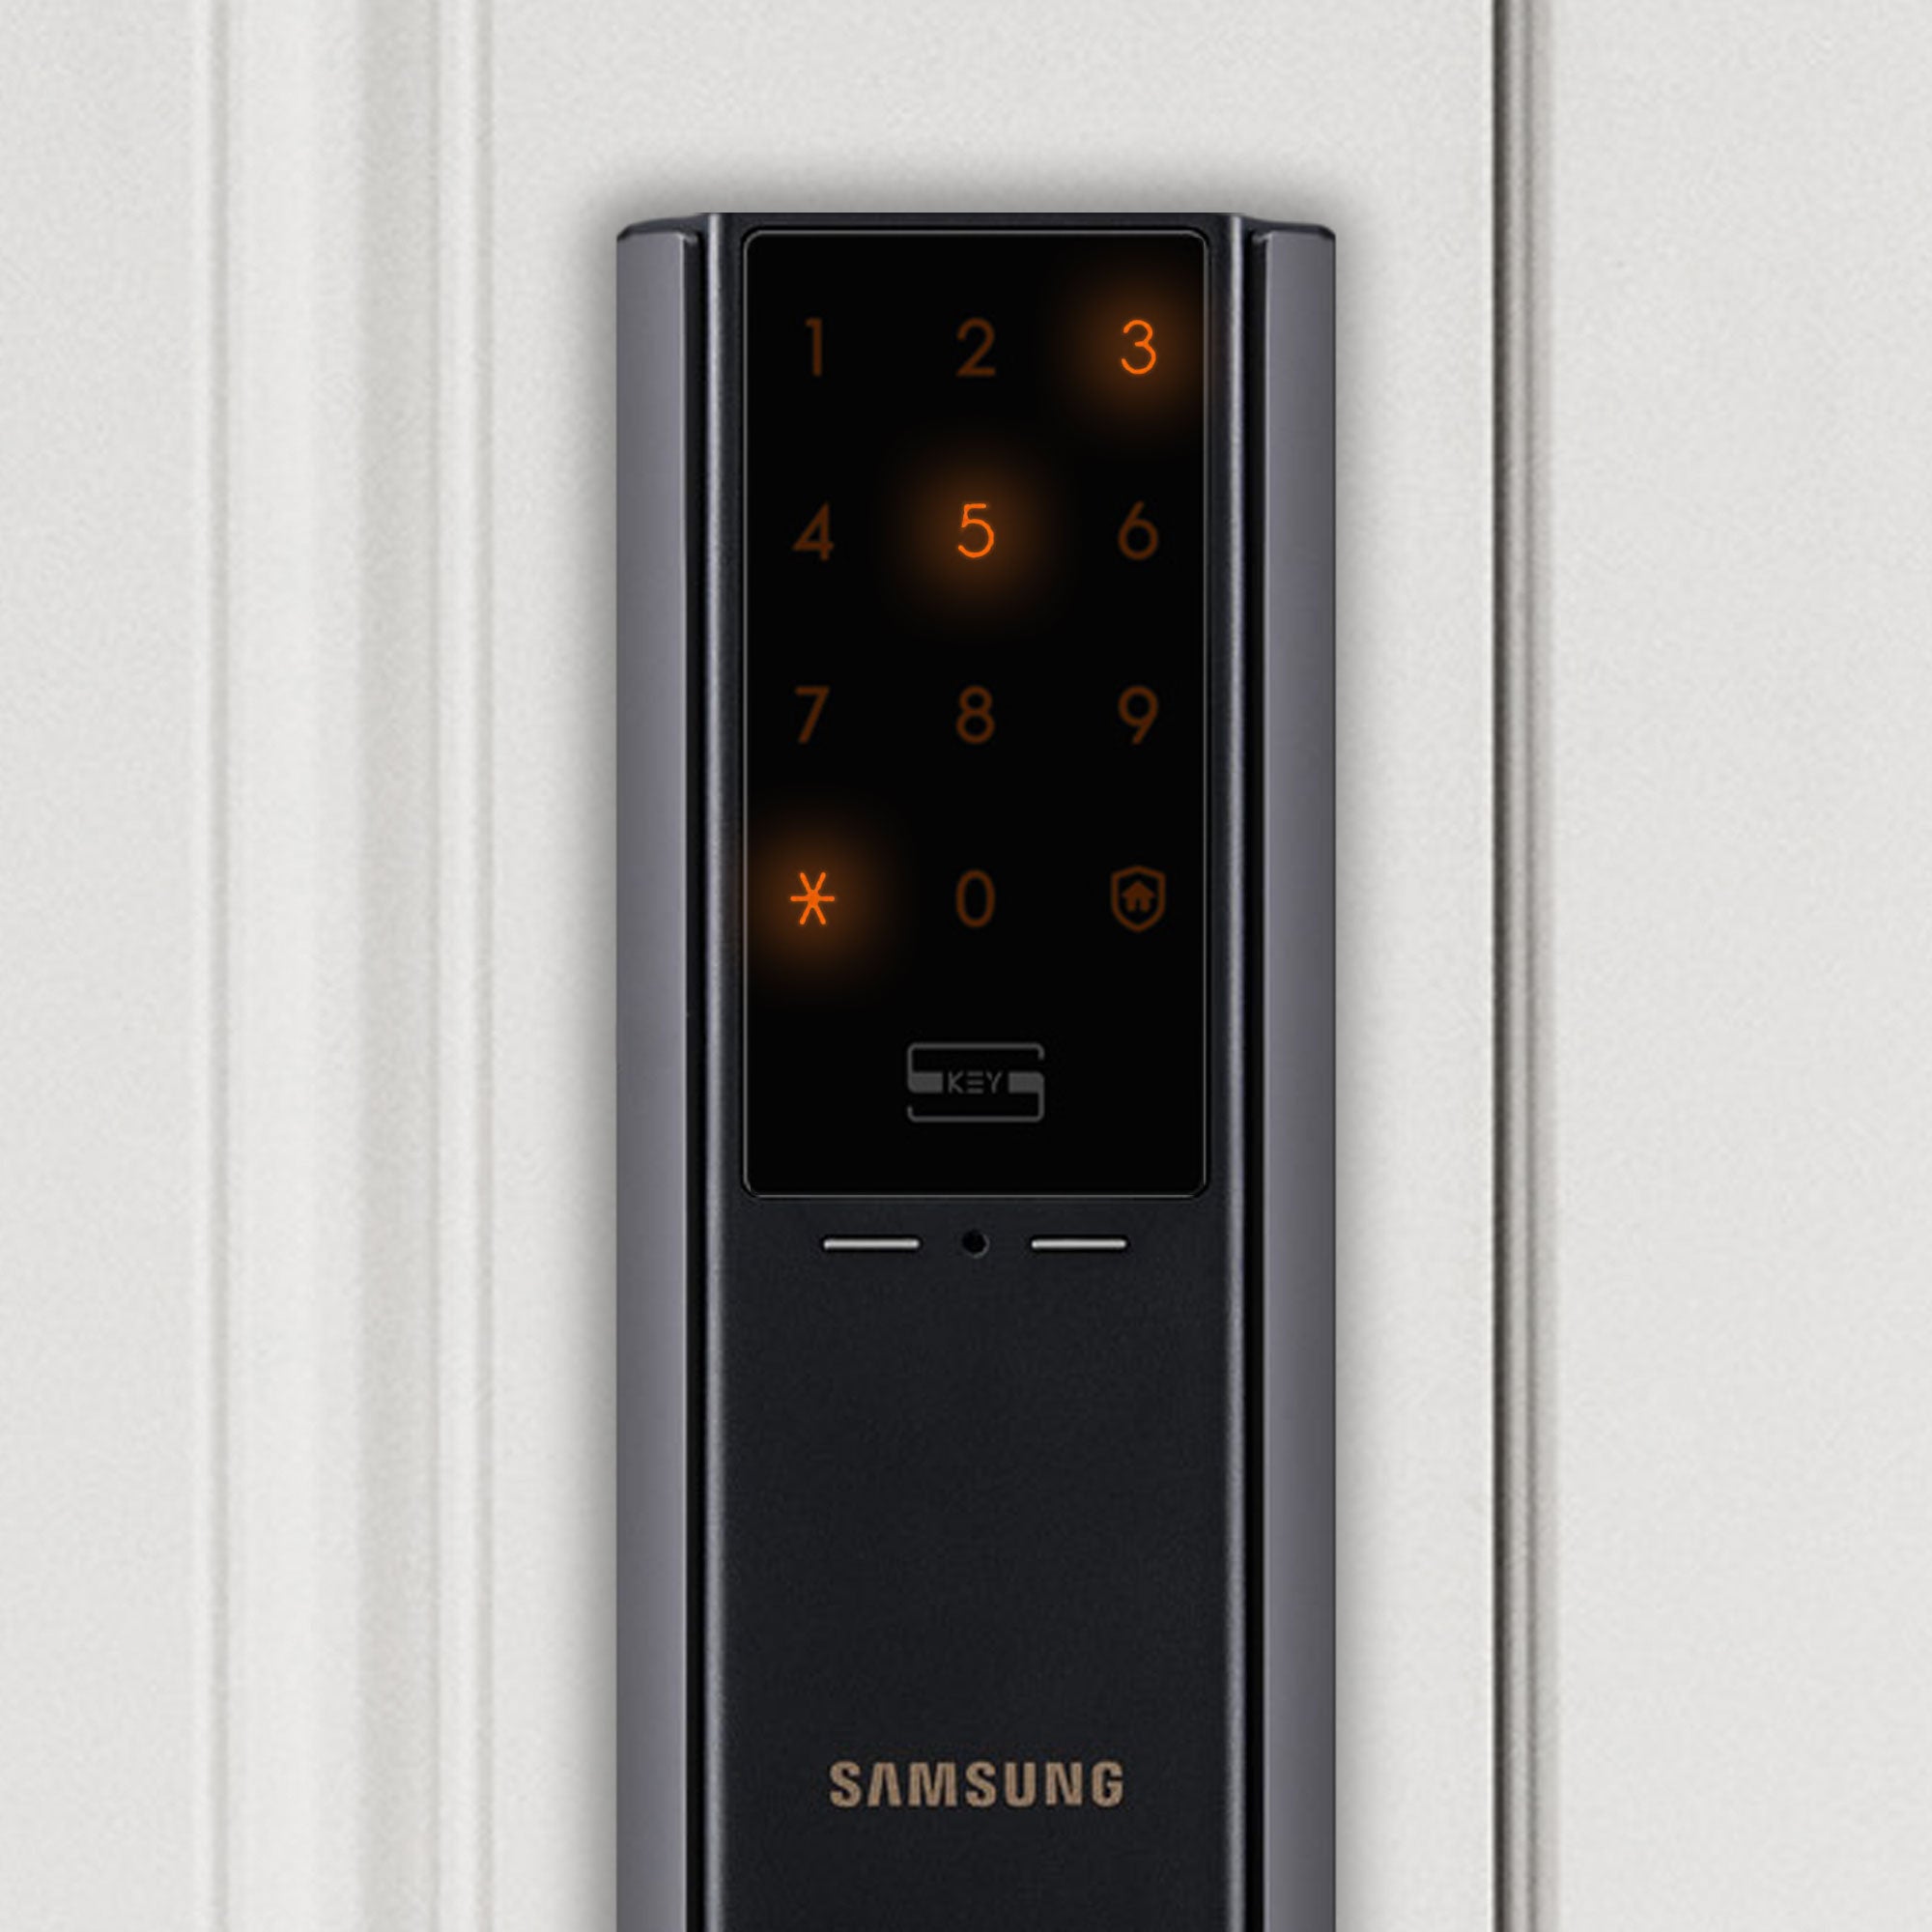 Pantalla LED de la Cerradura Samsung SHP-DH537